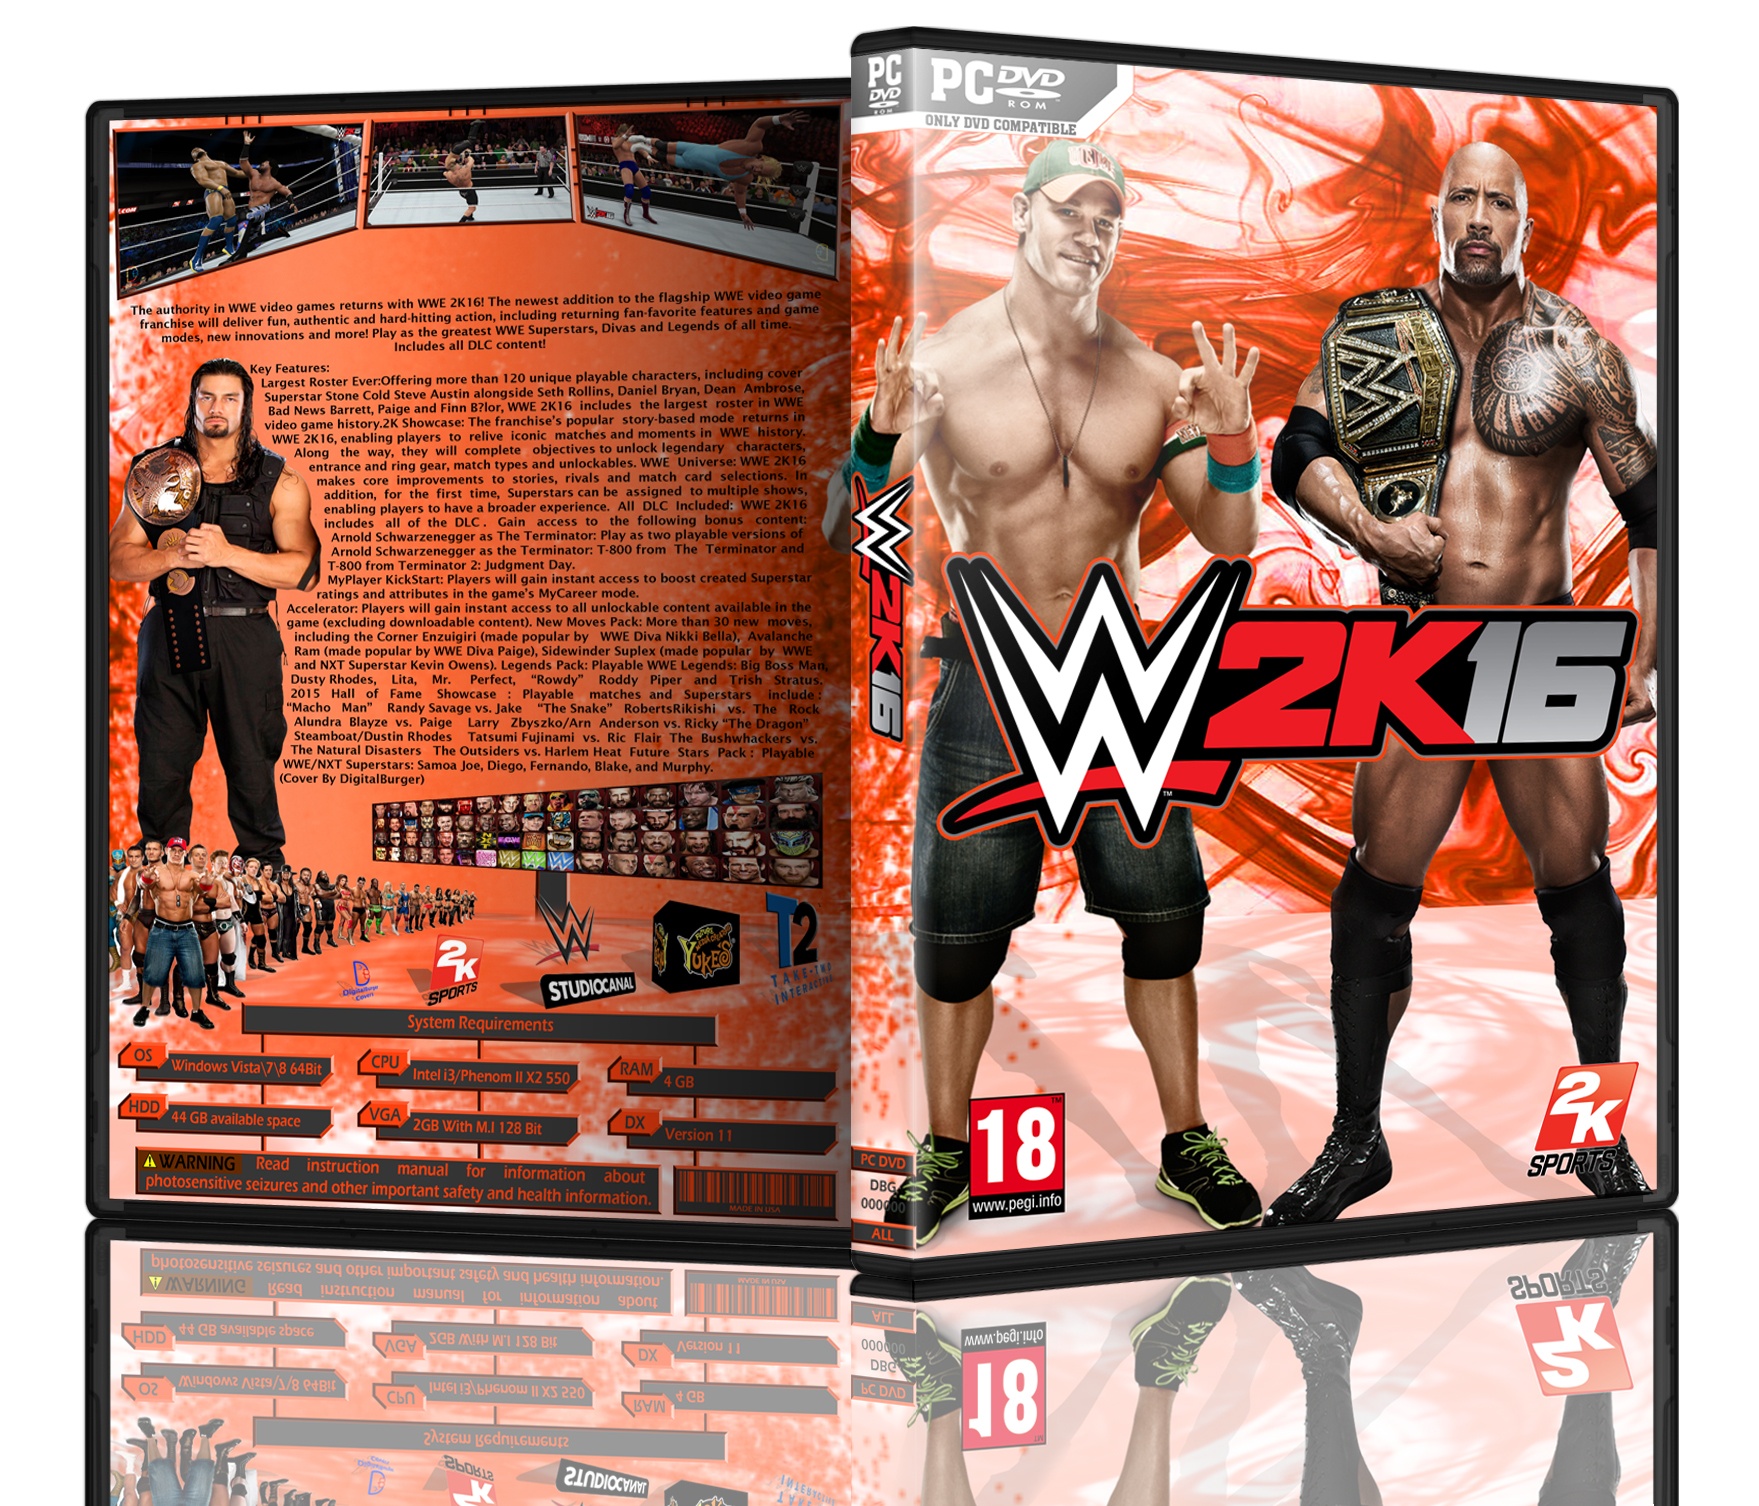 WWE 2K16 box cover